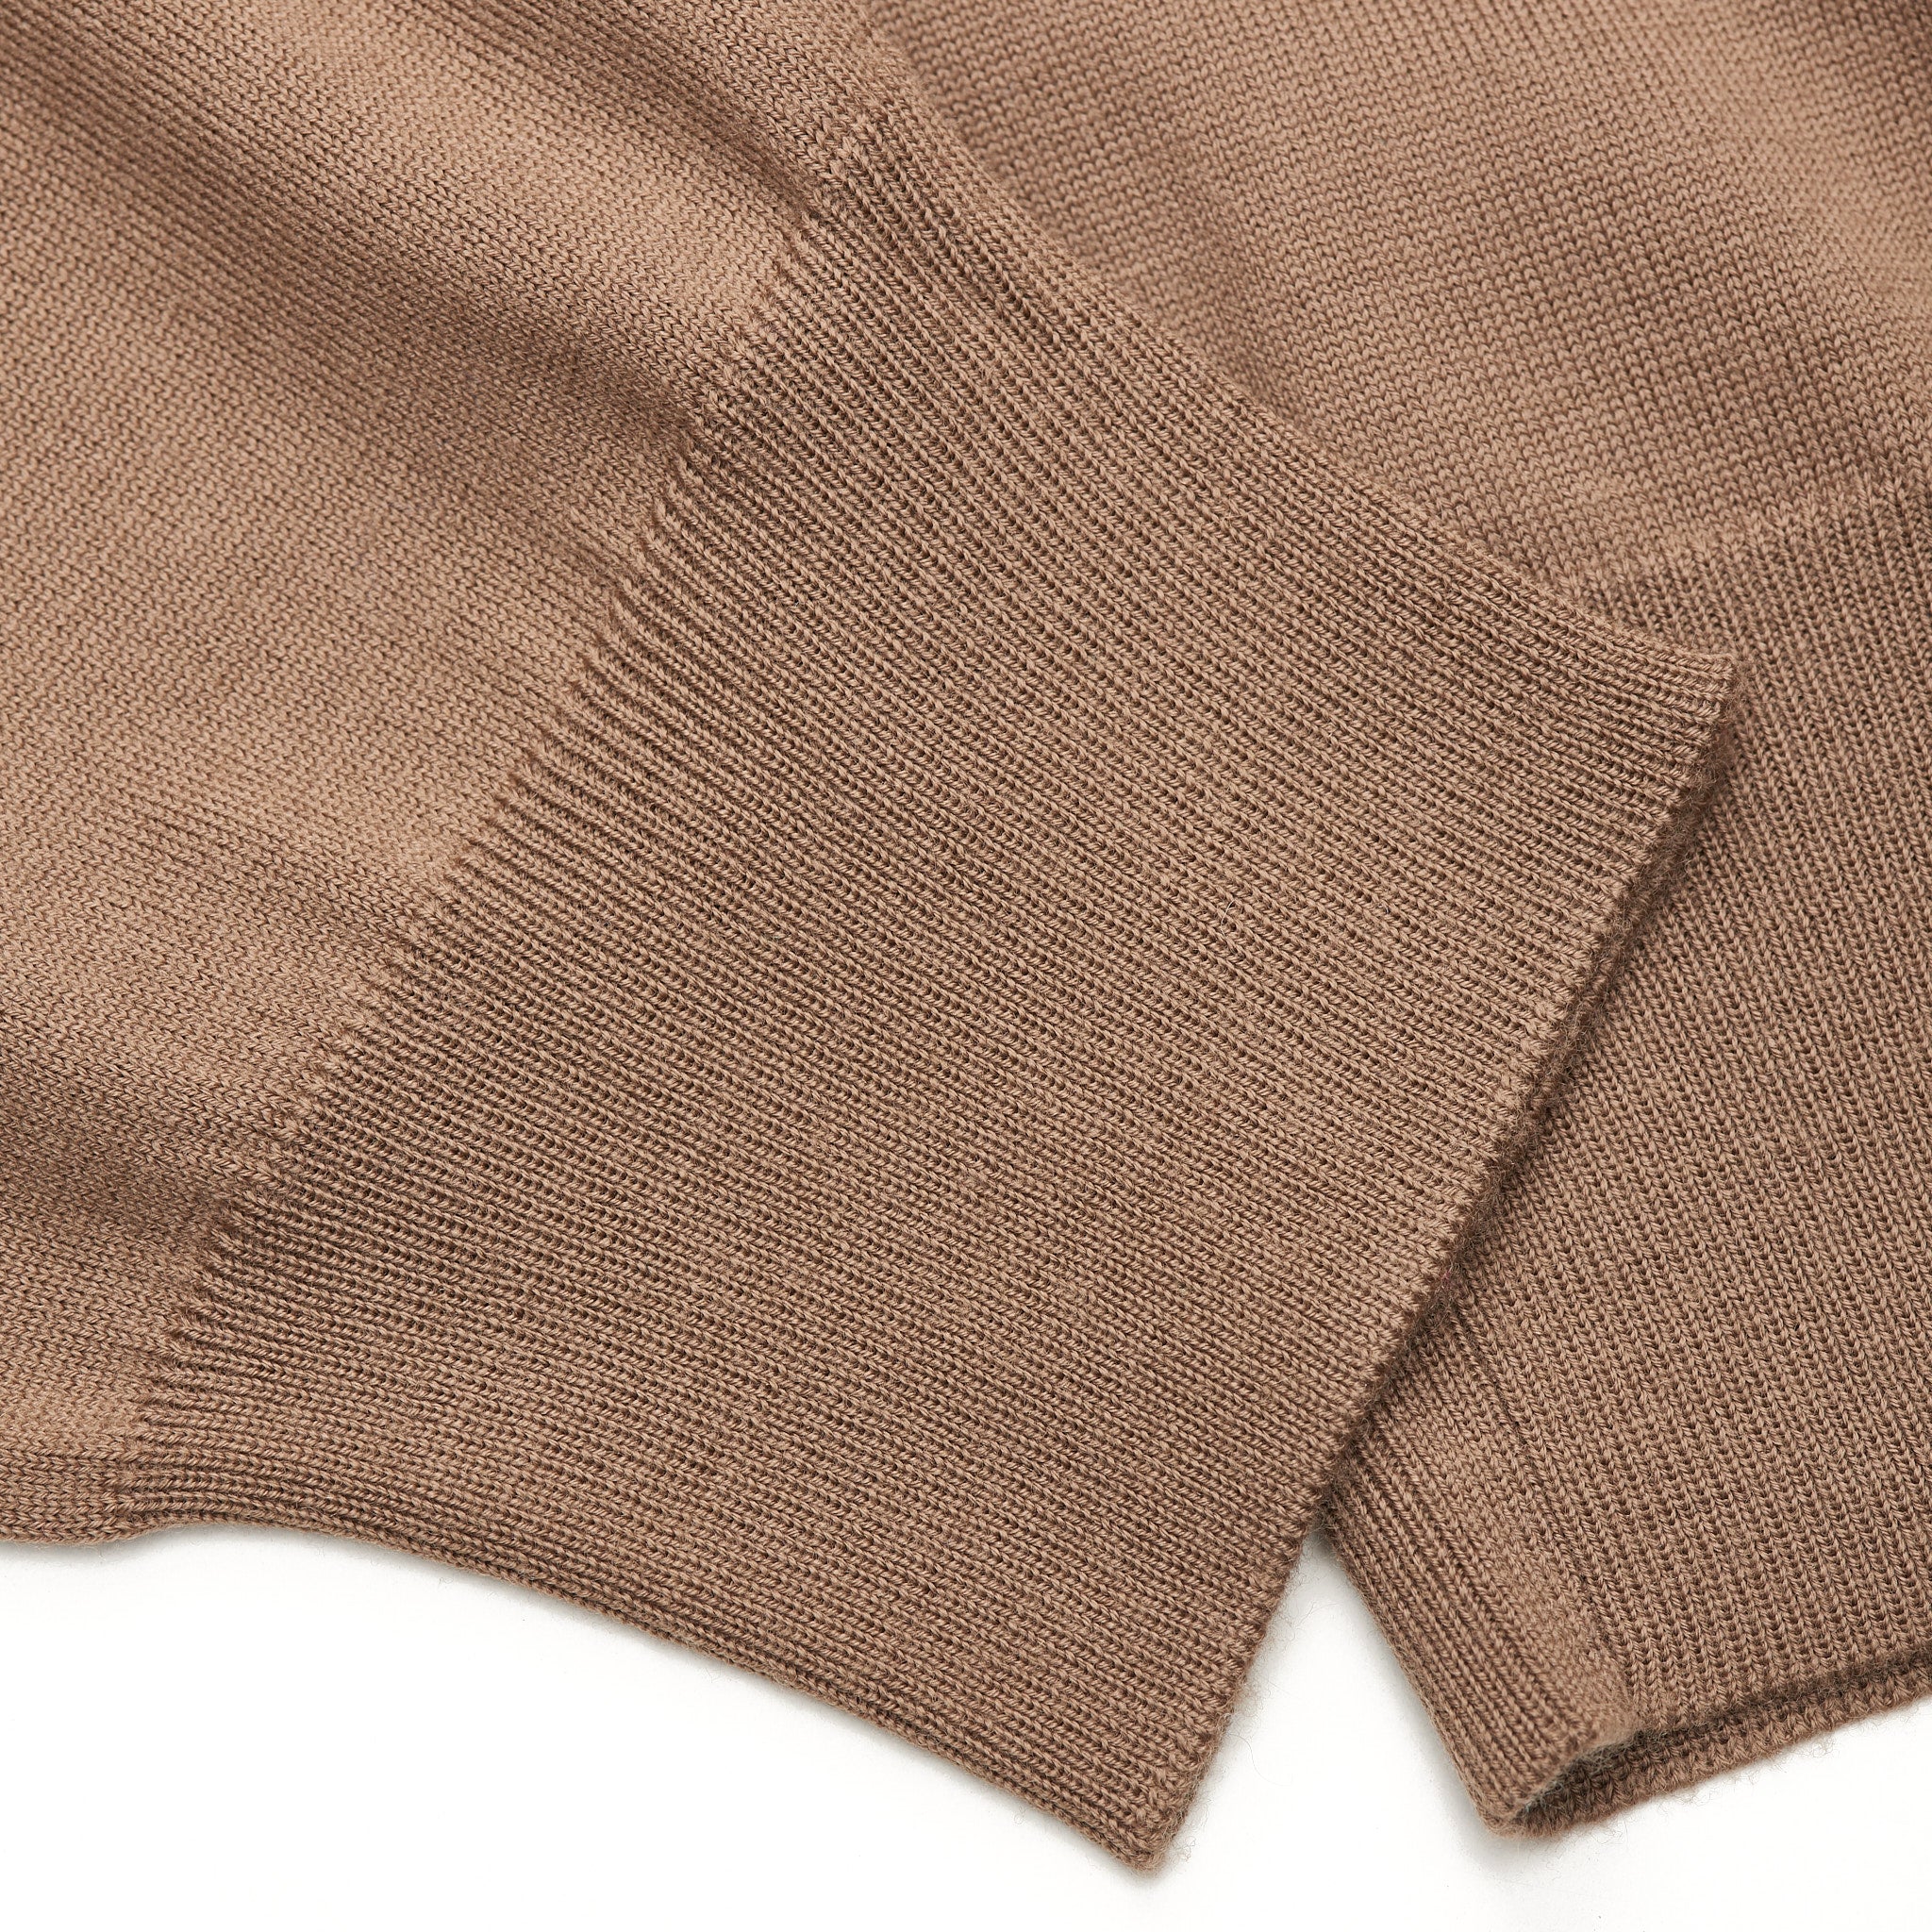 FEDELI Brown 15 Micron Wool Super 160's V-Neck Sweater EU 50 NEW US M